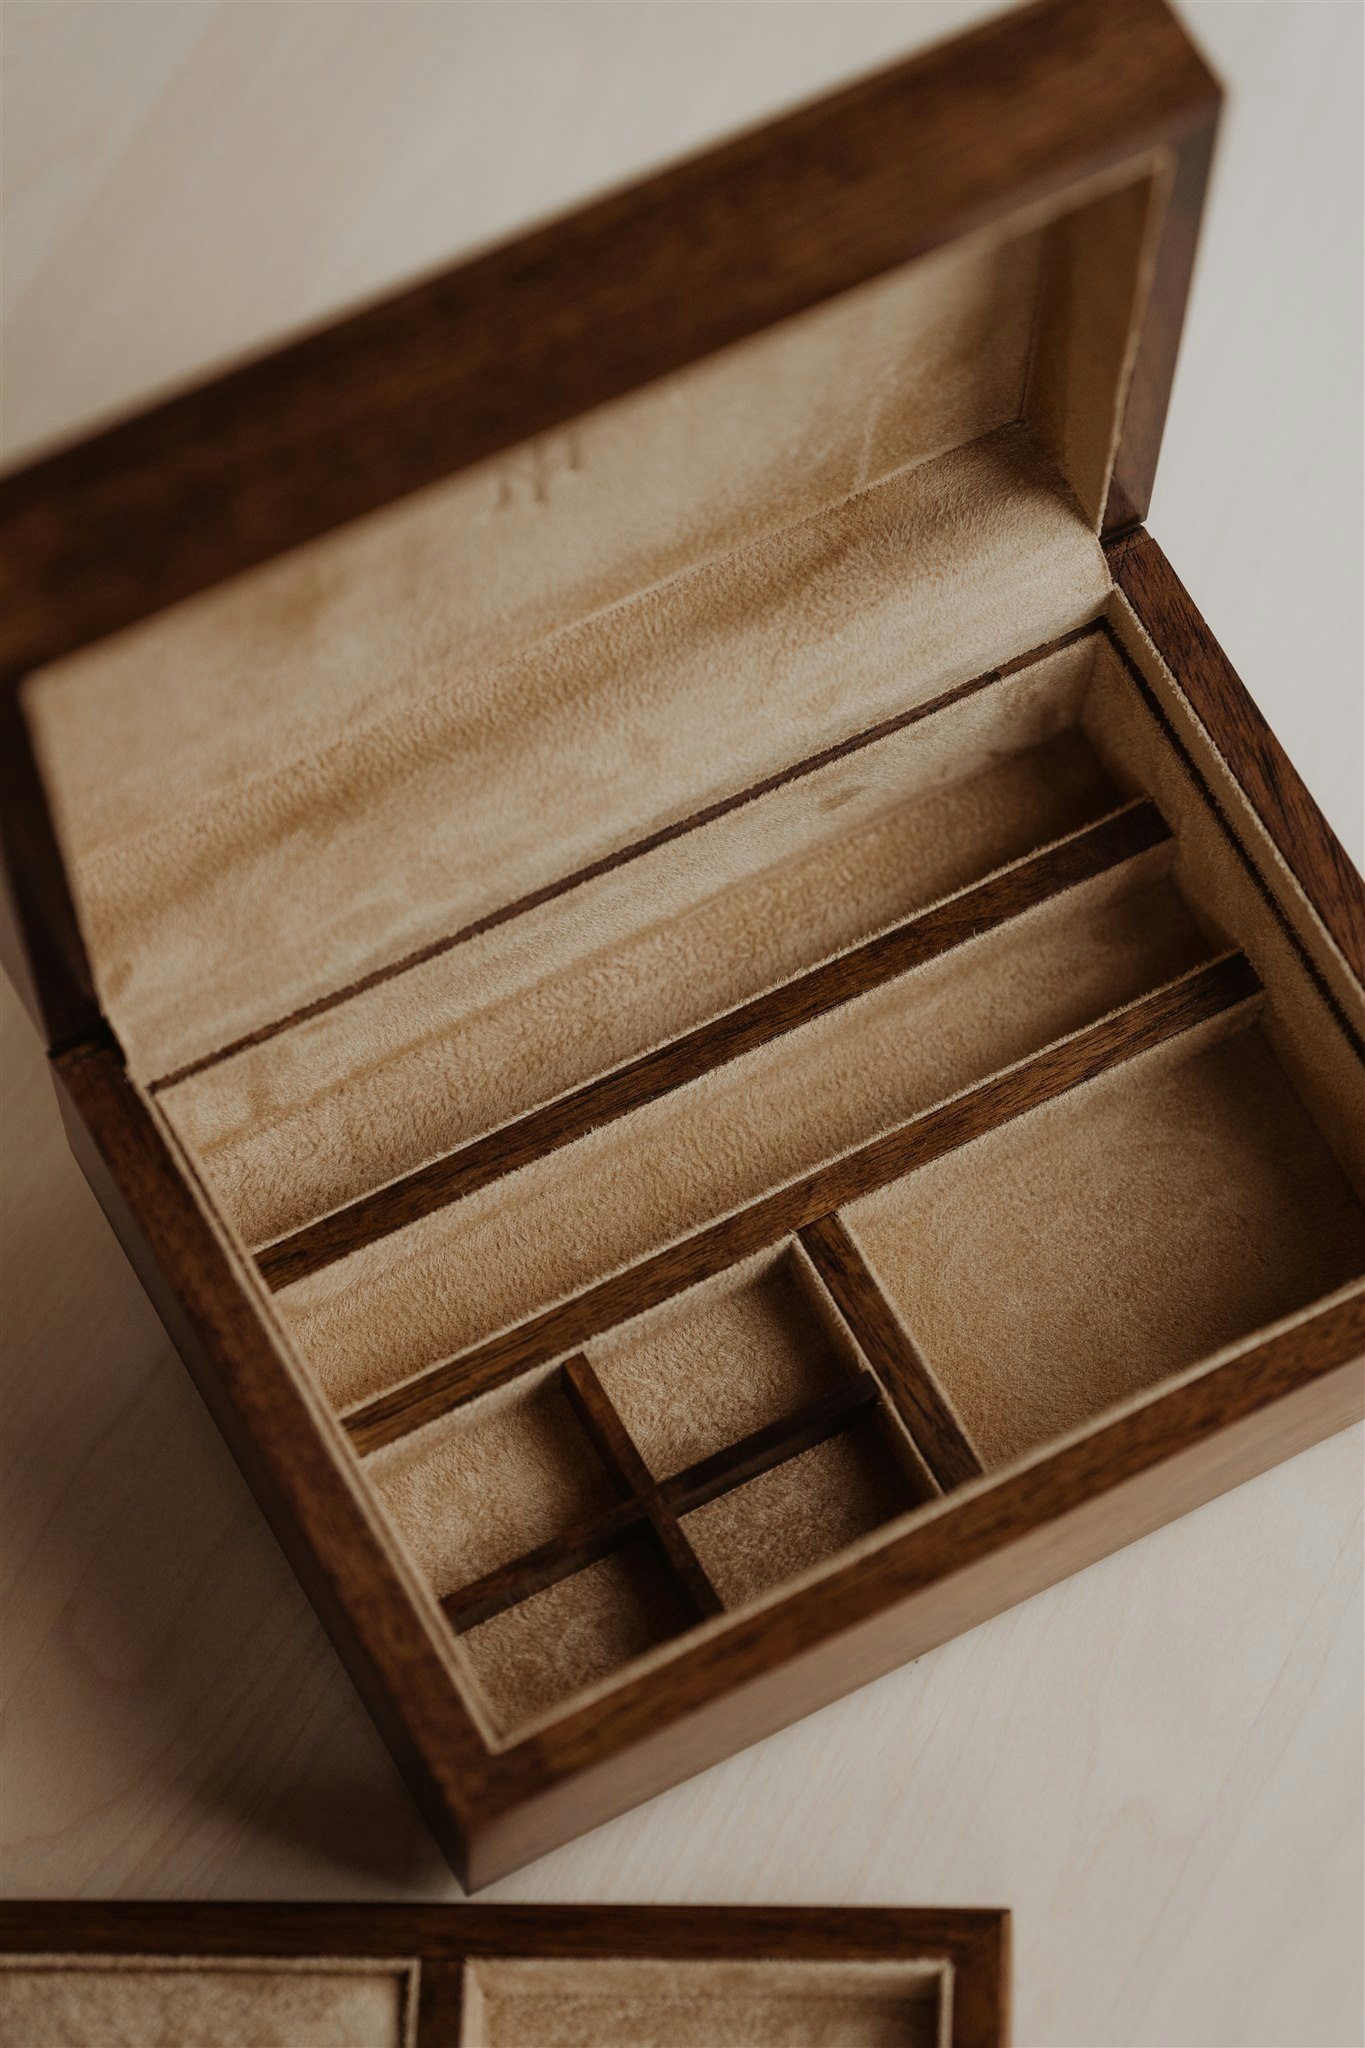 The jewelry box